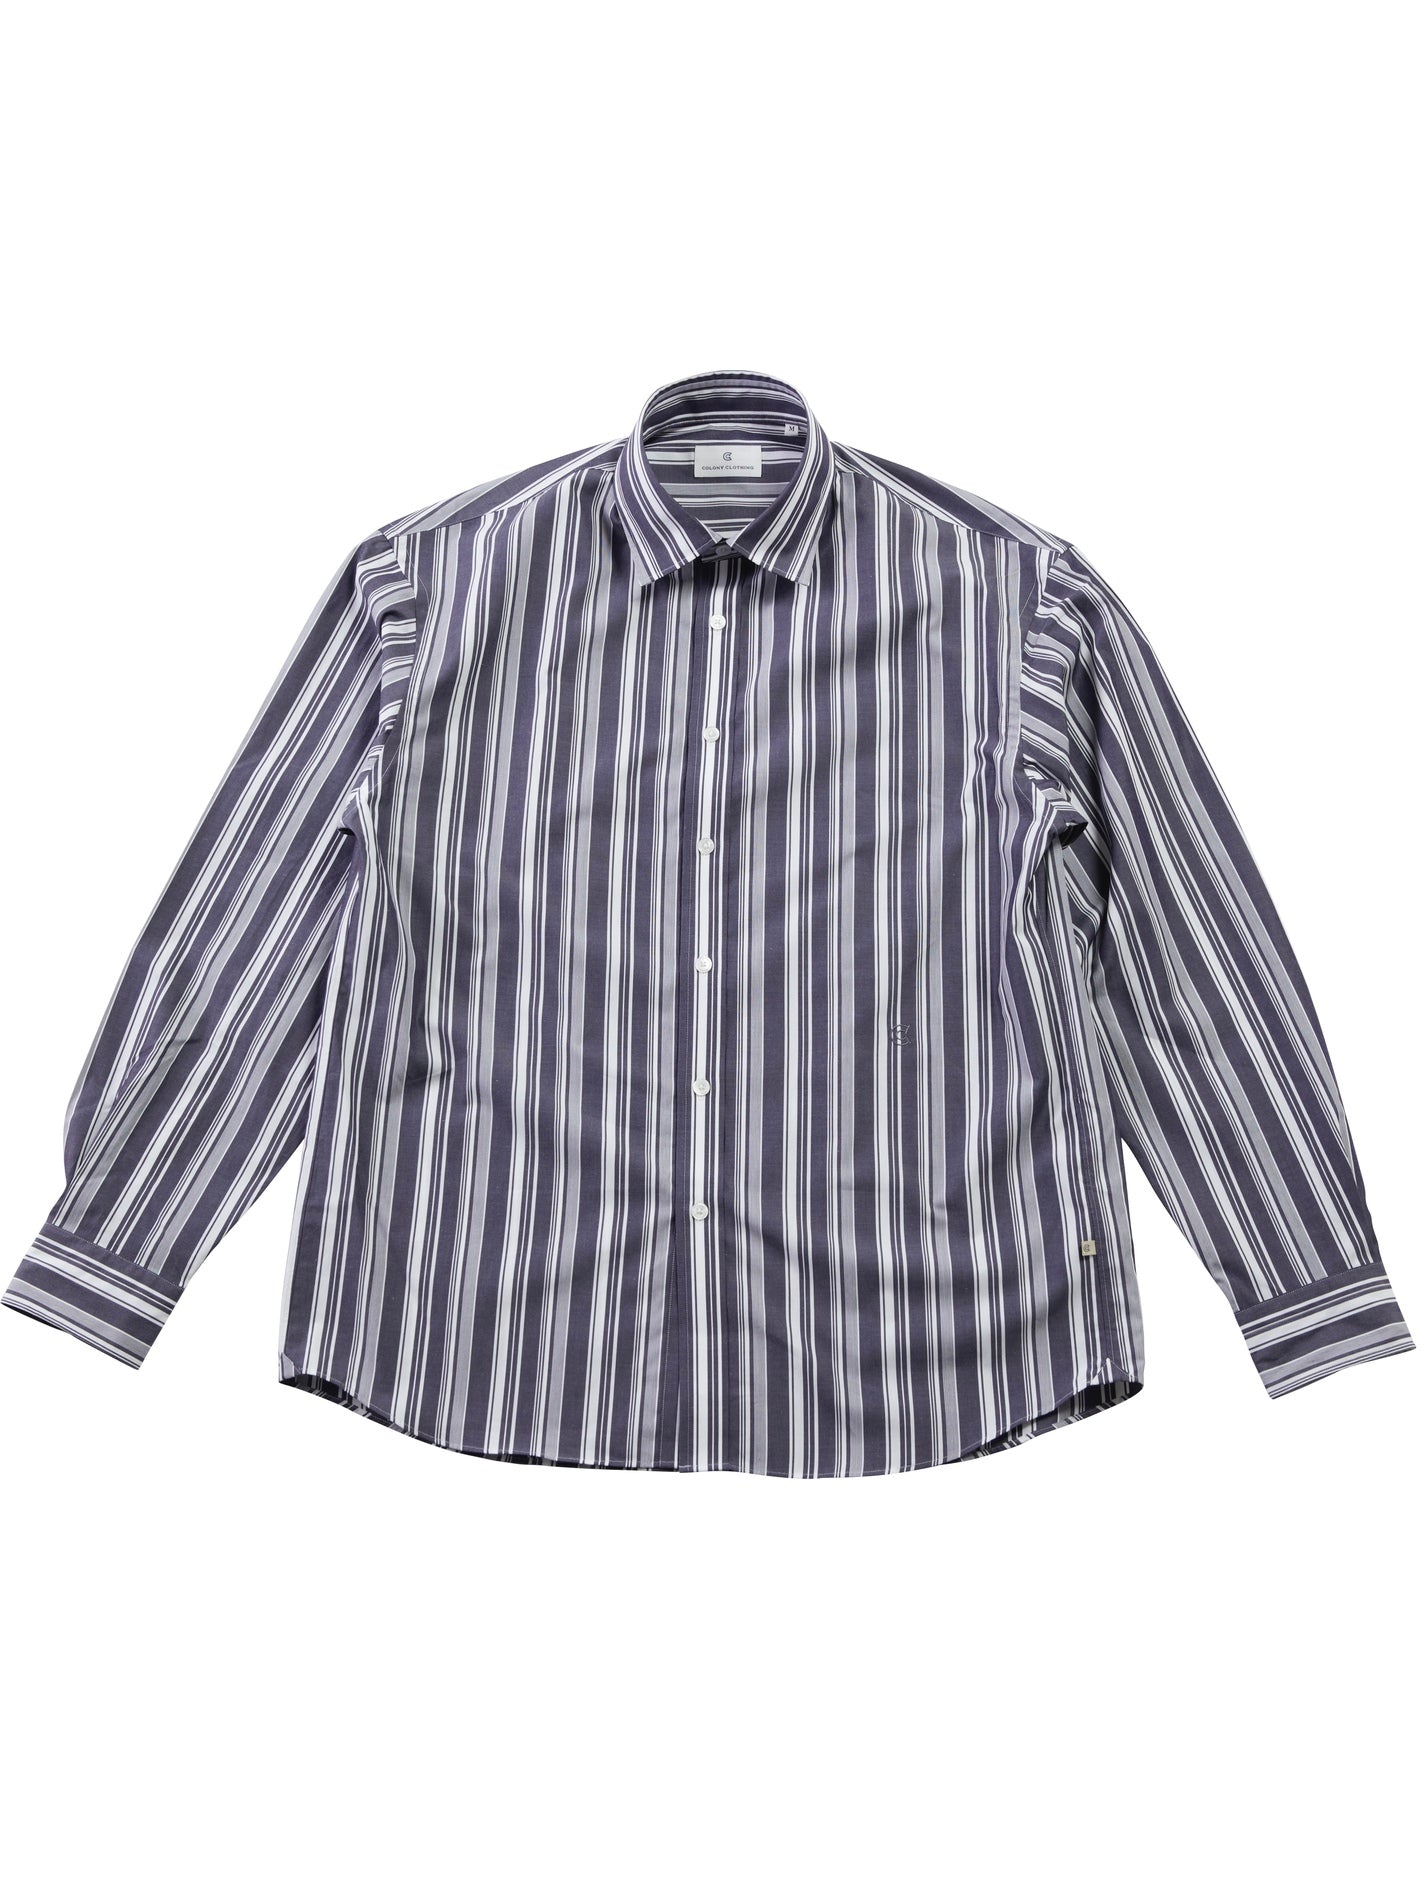 COLONY CLOTHING / ストライプ ラウンジシャツ② / CC2101-SH03-02